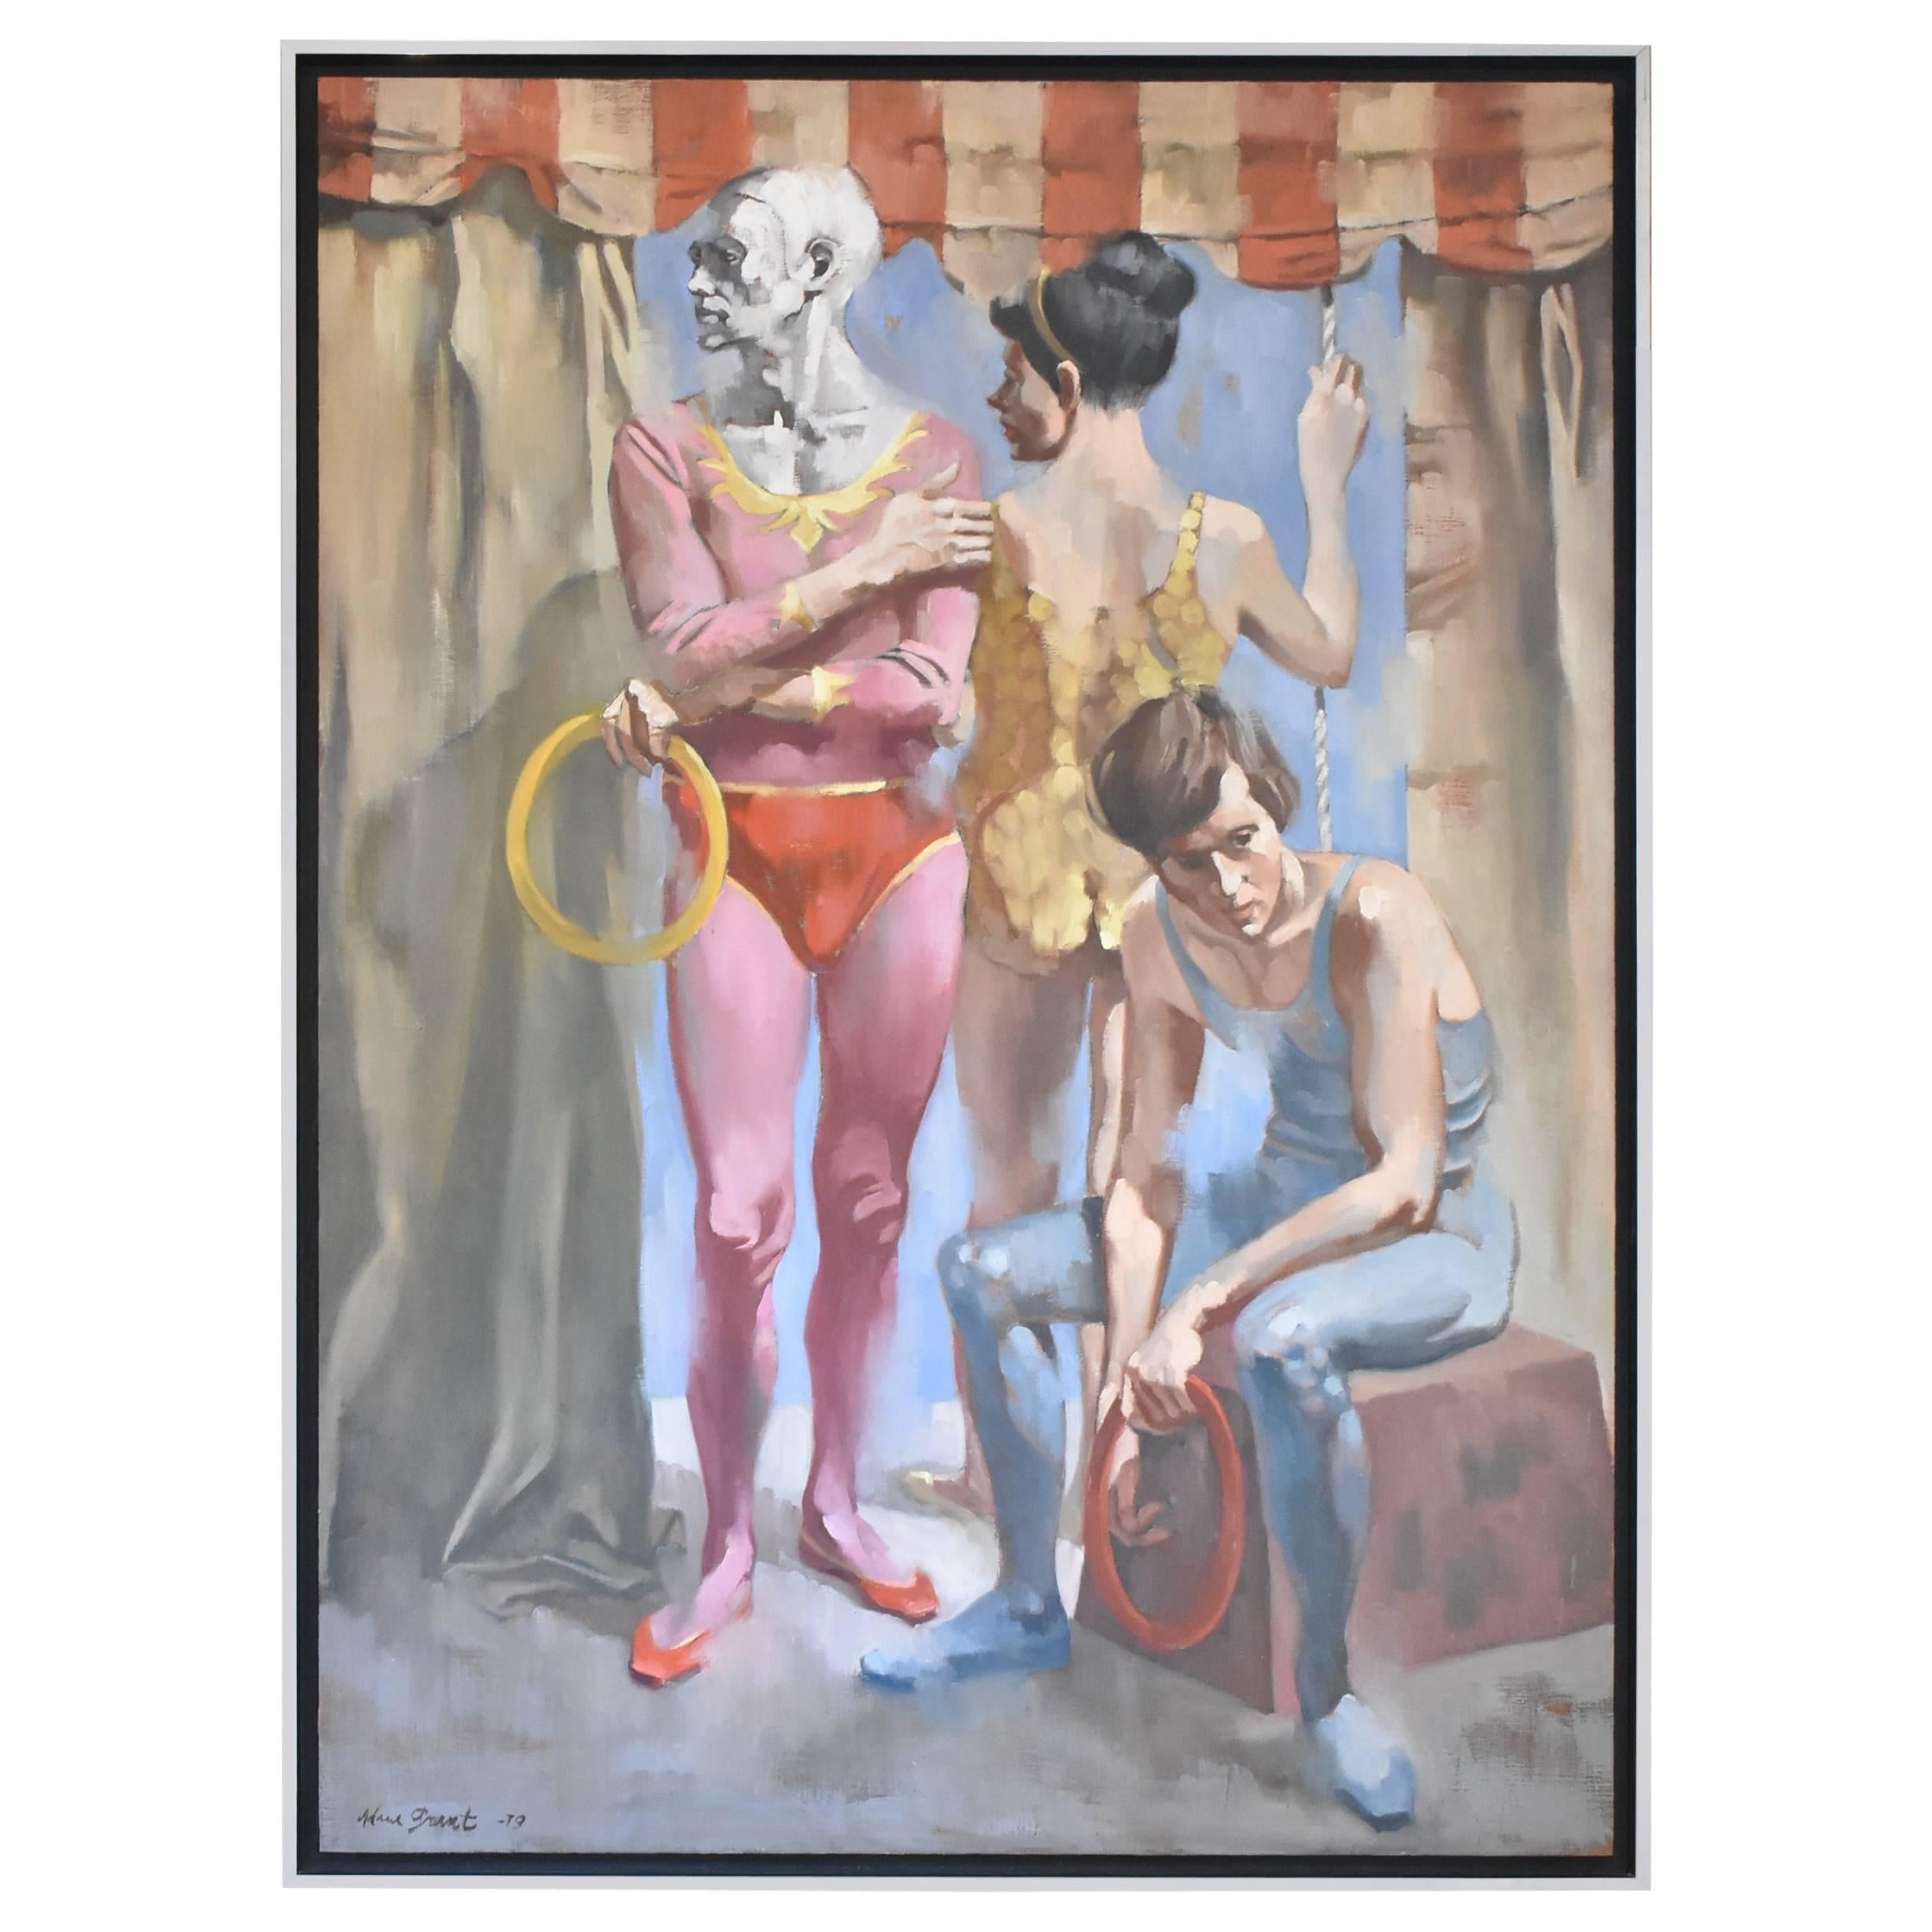 Original Oil on Canvas Artist Adam Grant Circus "Juggling Family" 1979